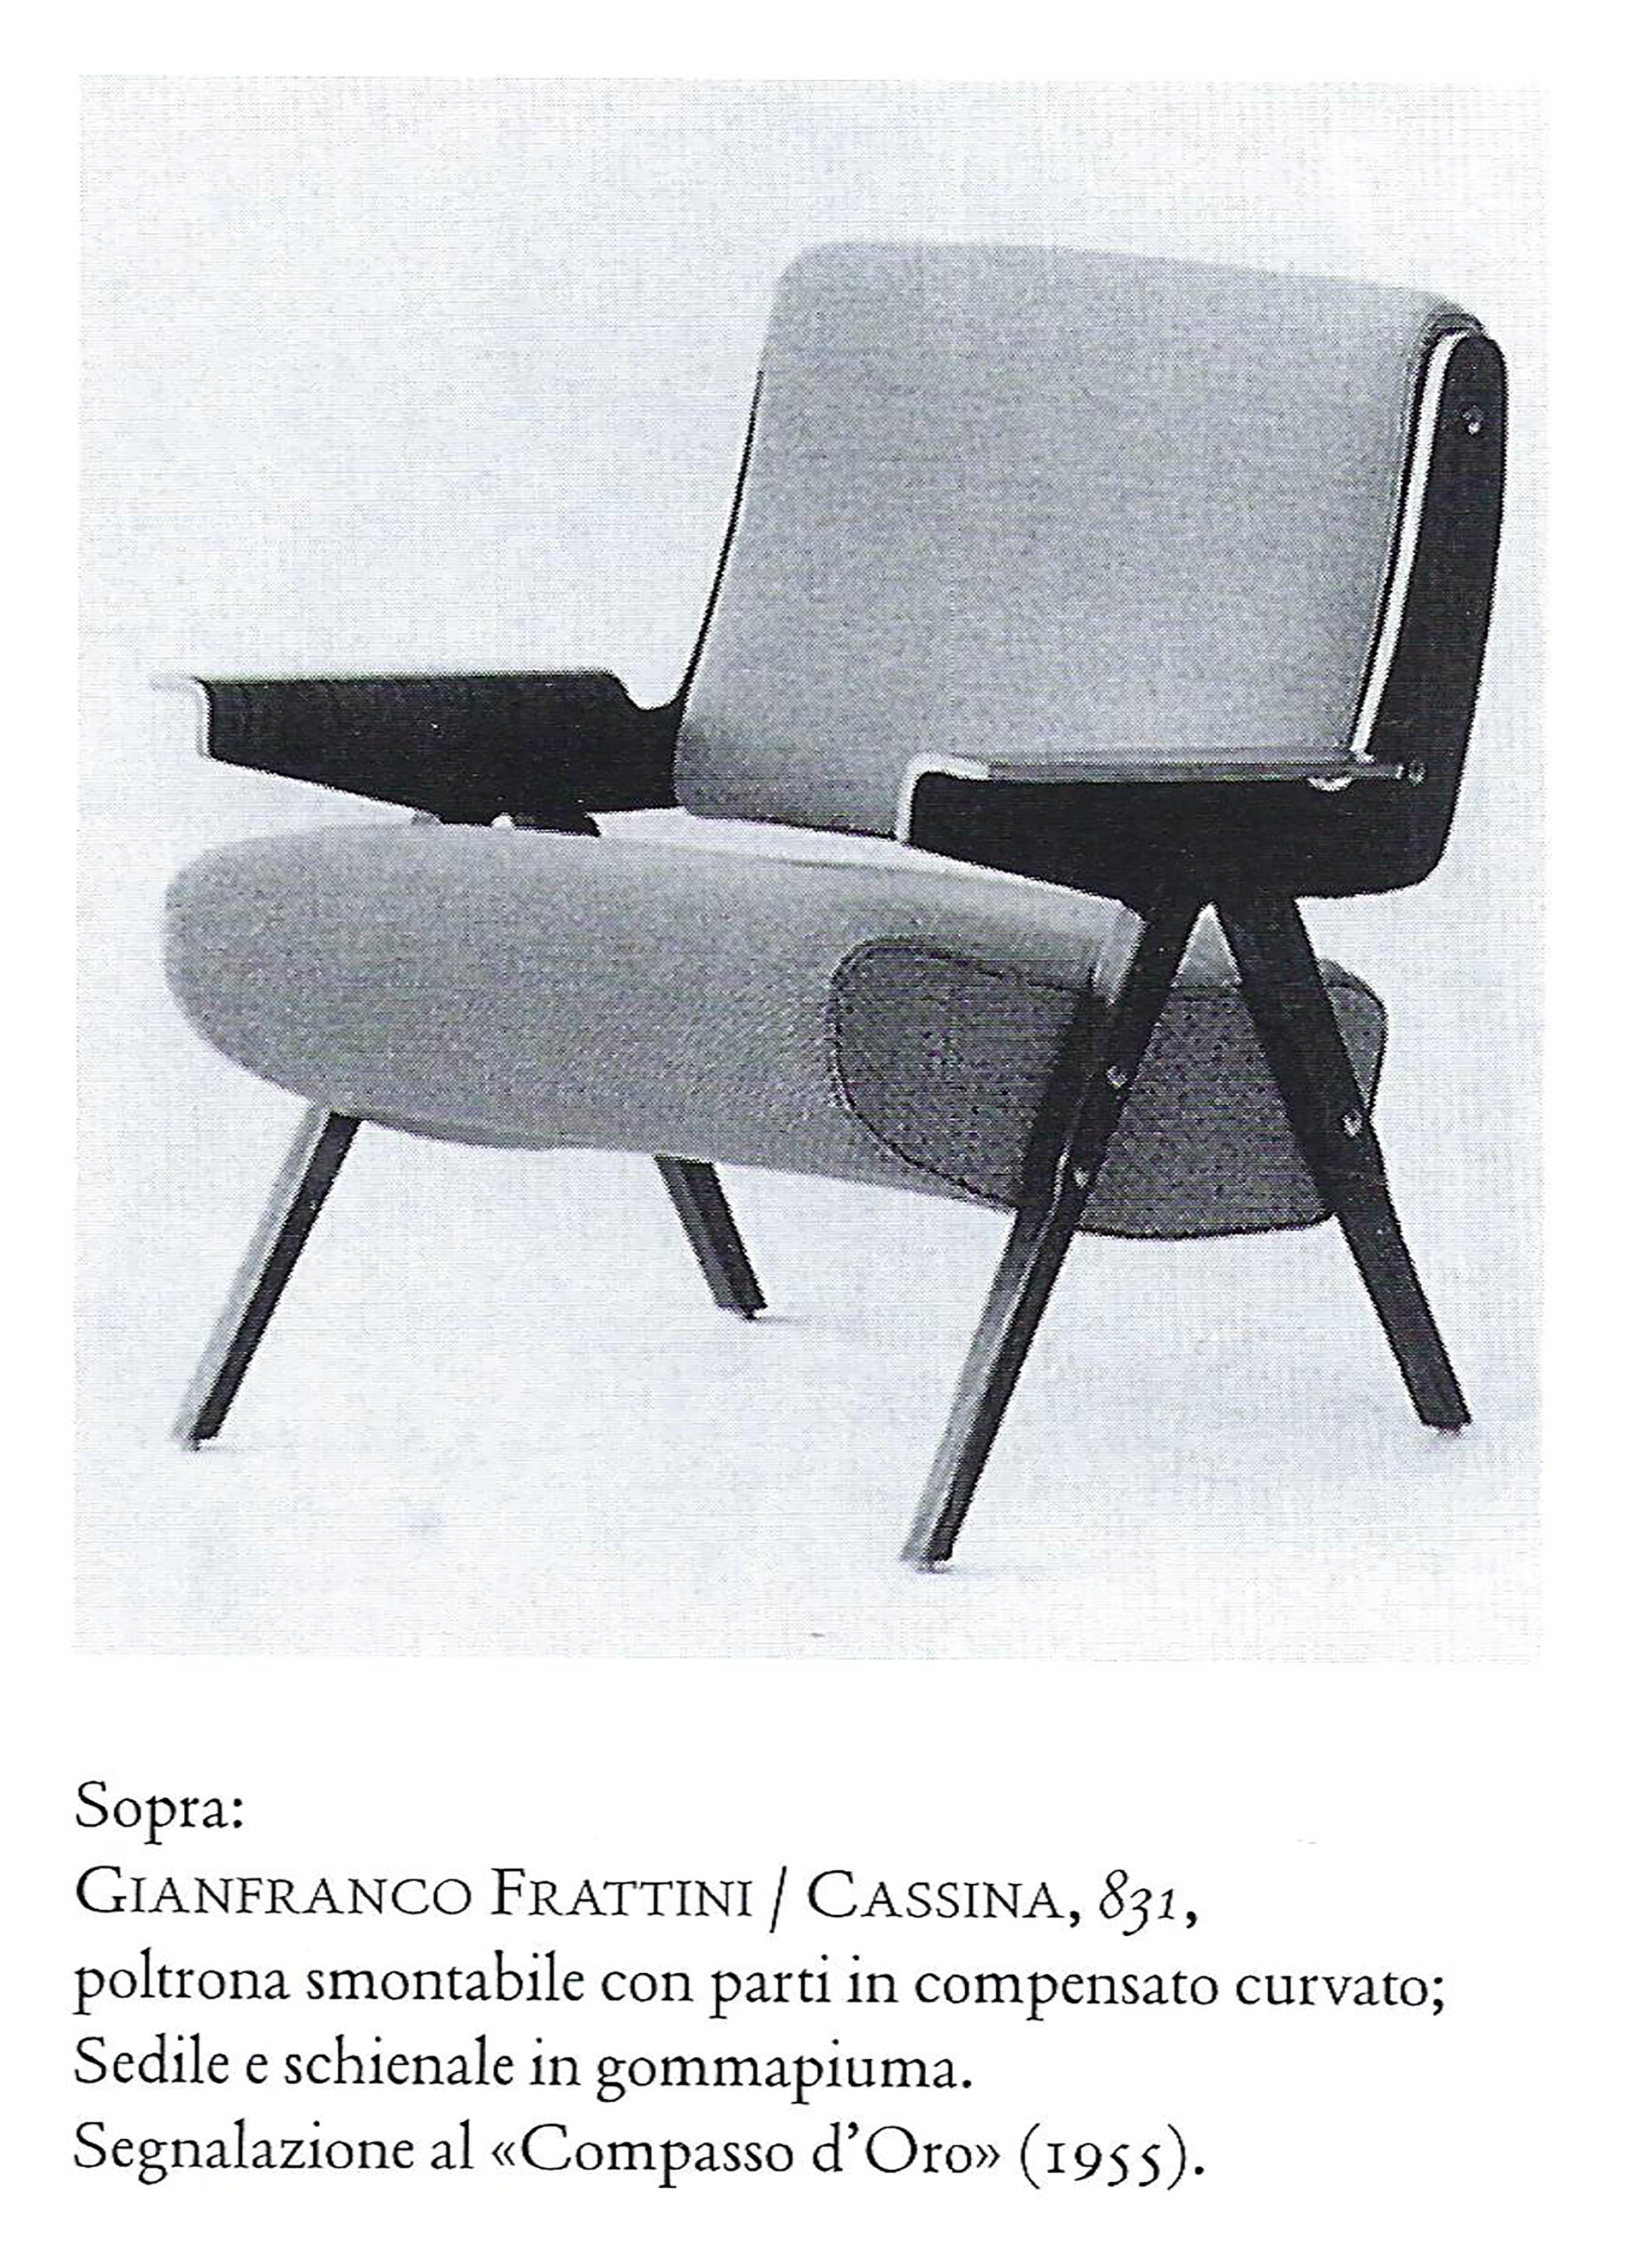 Seltenes Paar Mahagoni-Loungesessel, Modell 831, Gianfranco Frattini für Cassina im Angebot 3